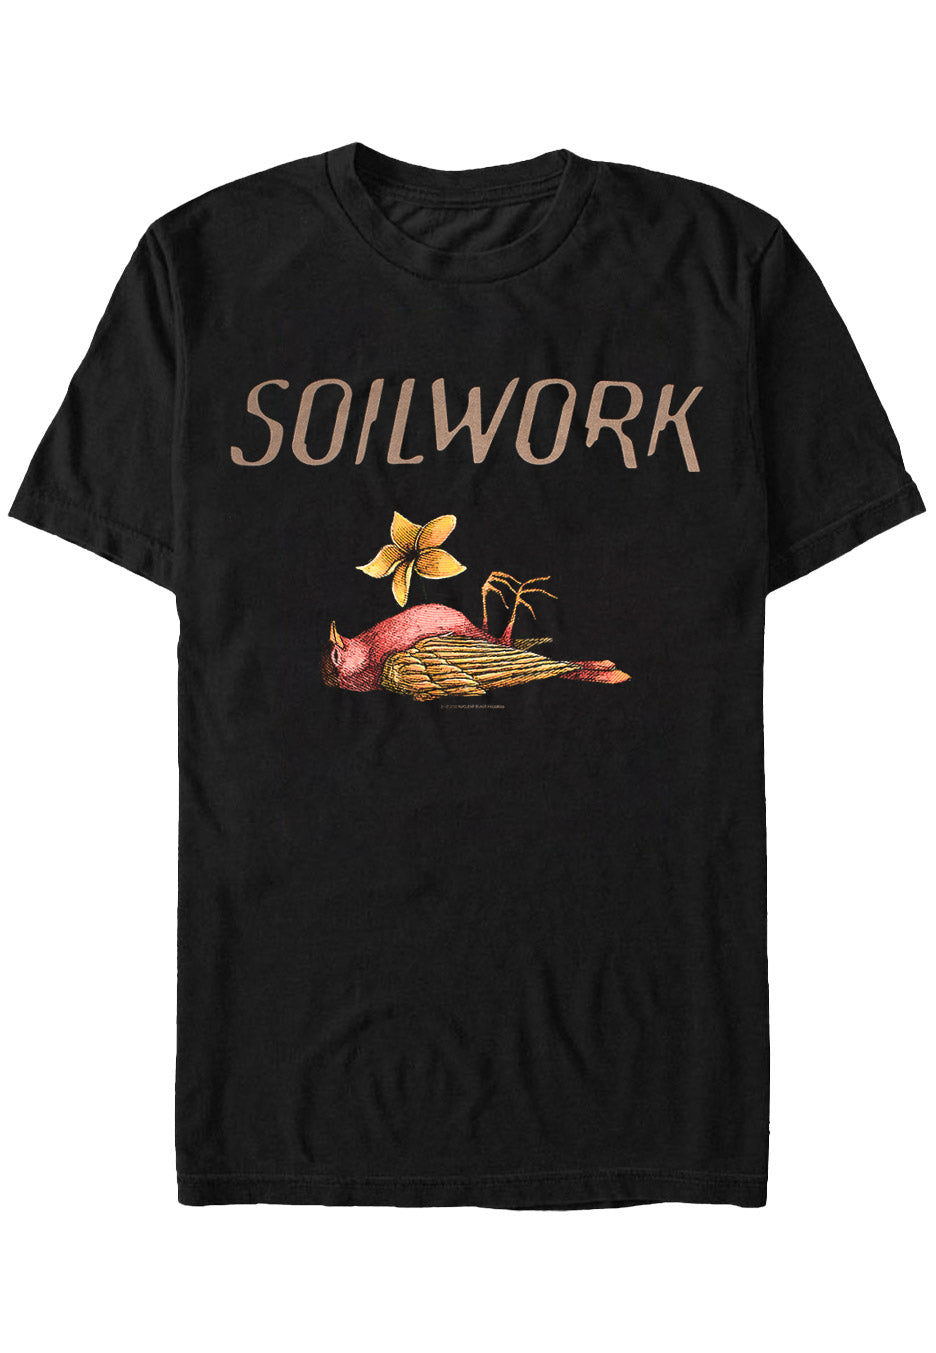 Soilwork - Some Words - T-Shirt